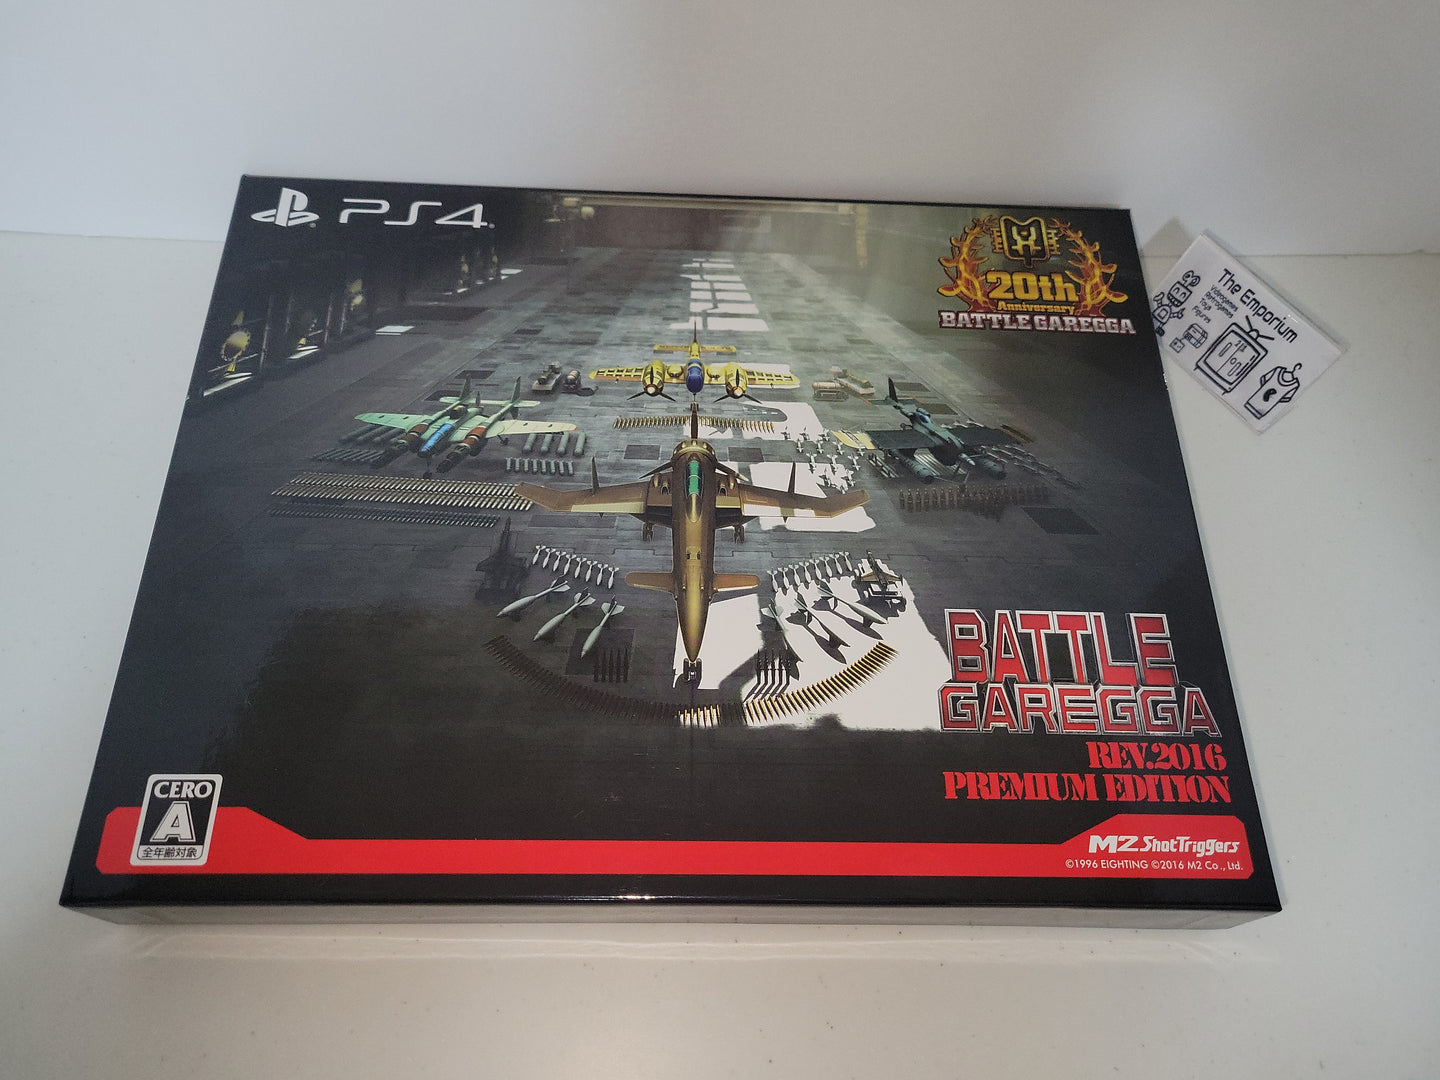 Battle Garegga 2016 Limited edition box (NO SOFTWARE) - Sony PS4 Playstation 4